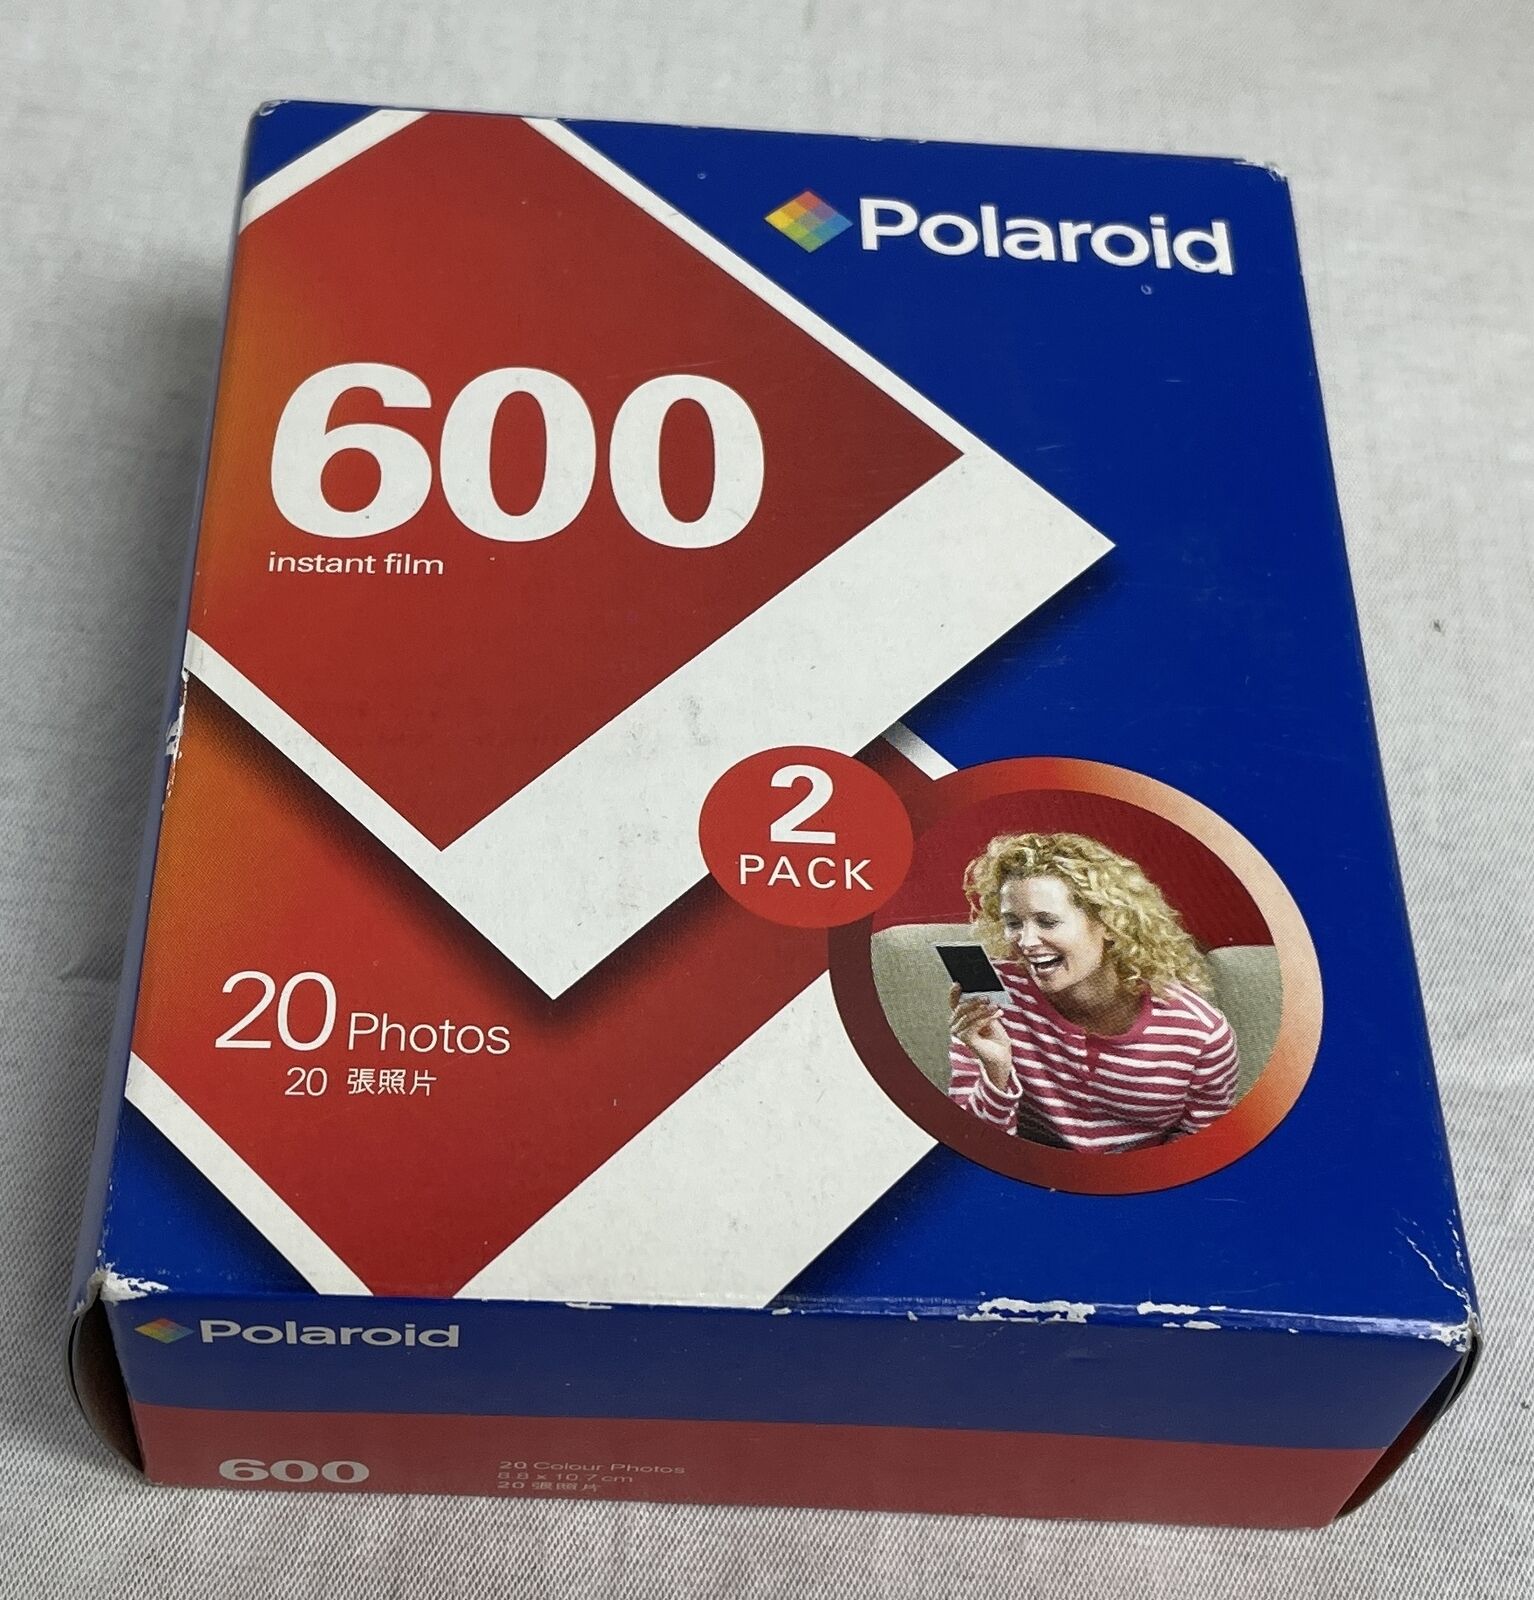 Kosciuszko ontvangen lotus Polaroid 600 Instant Film 2 Pack 20 Photos in Box Expired 03/07 - New &  Unopened | eBay